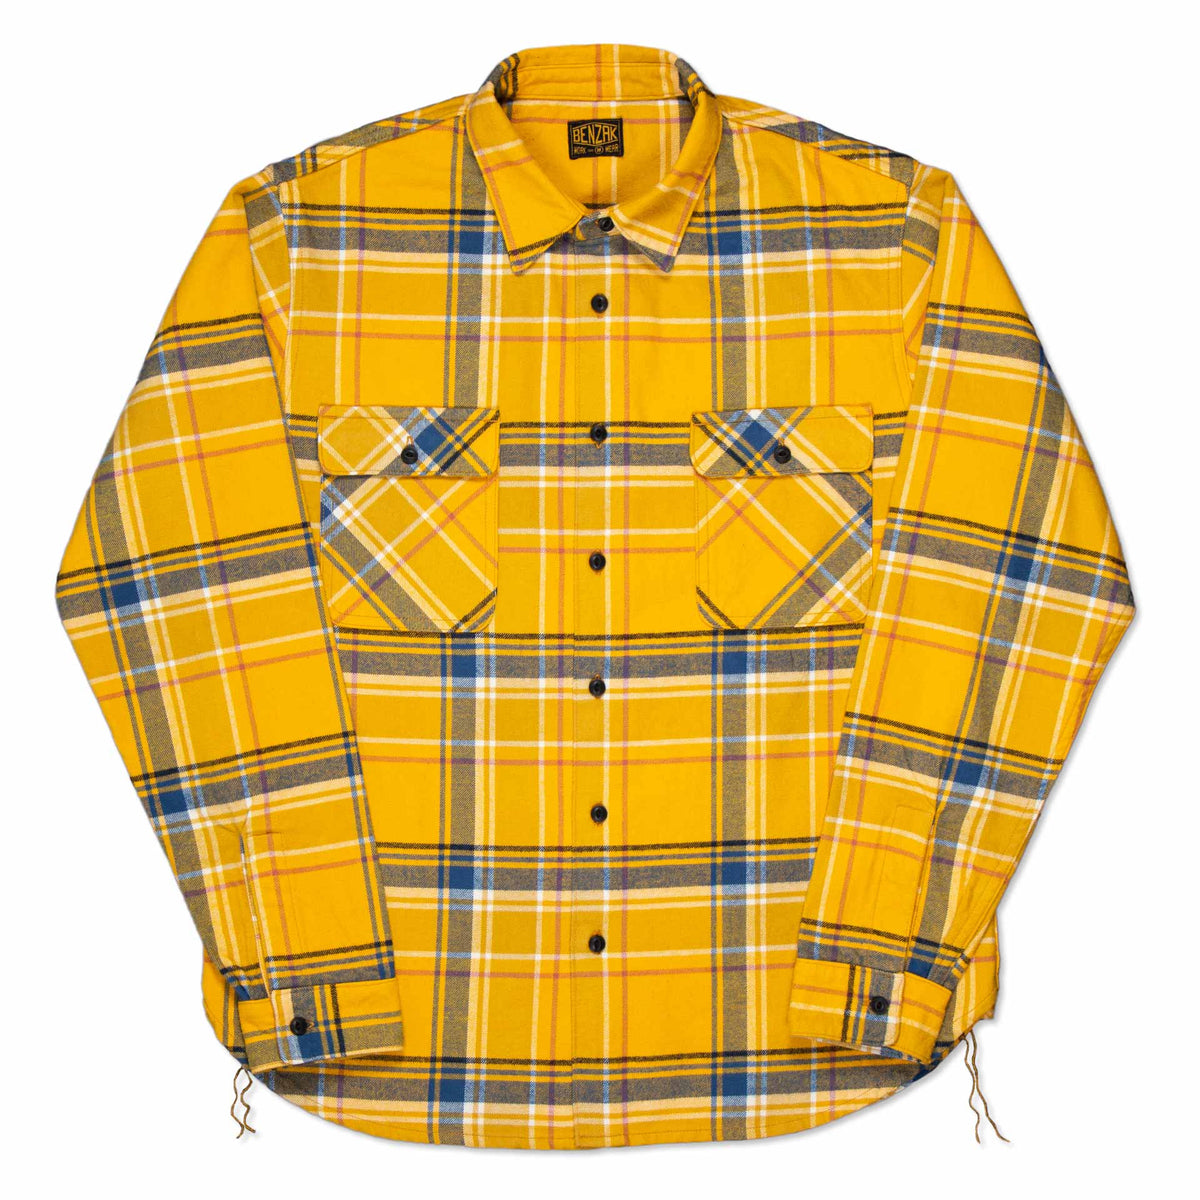 BWS-01 WORK SHIRT 8 oz. yellow & blue check flannel | BENZAK